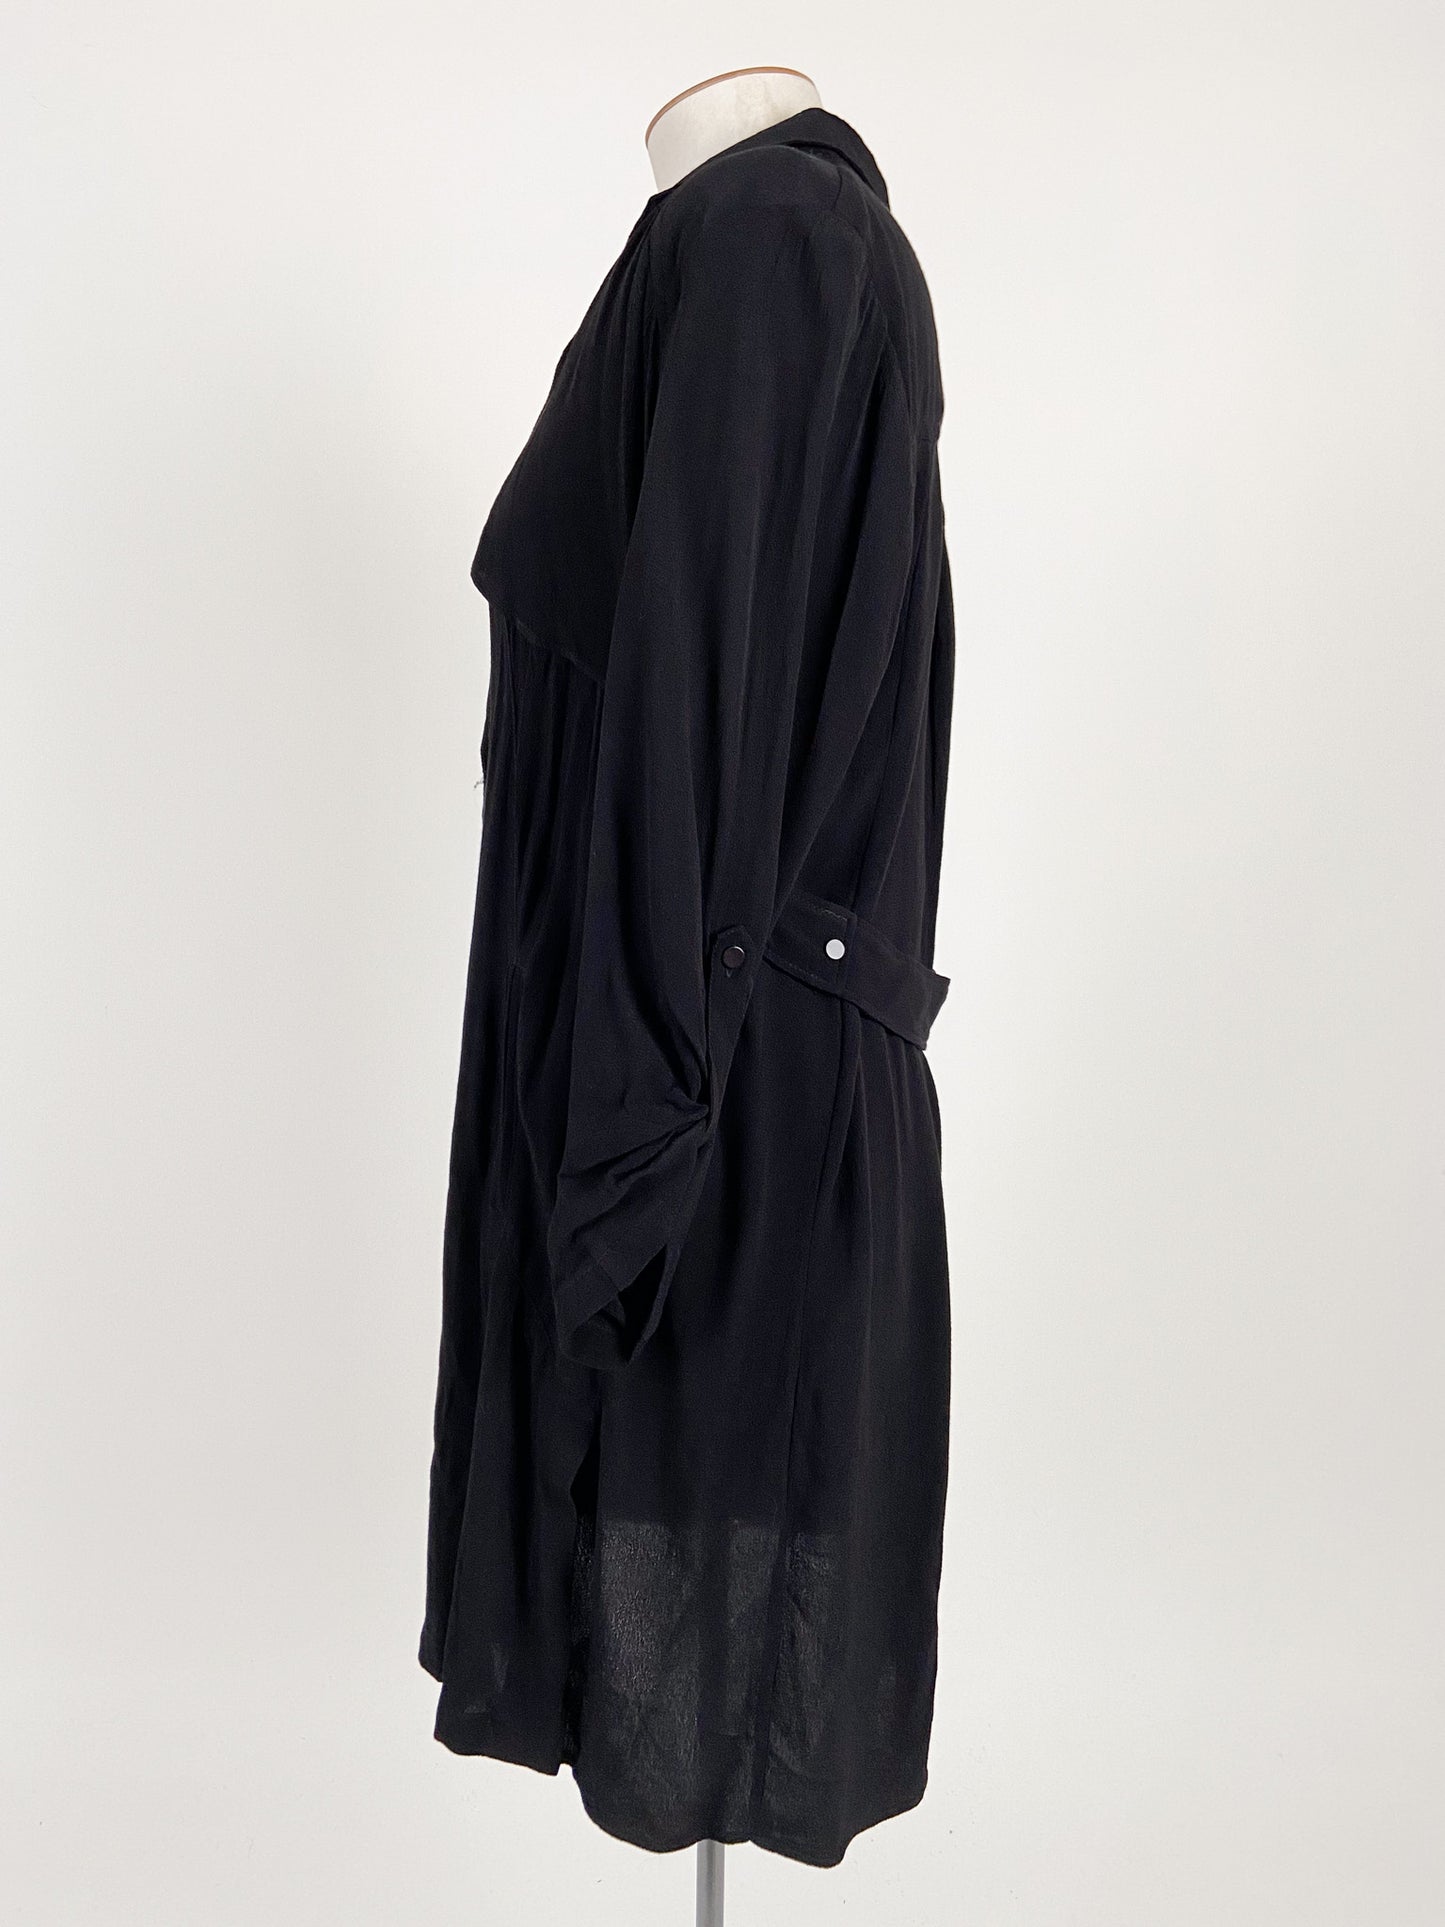 Merric Classic | Black Workwear Cardigan | Size 14